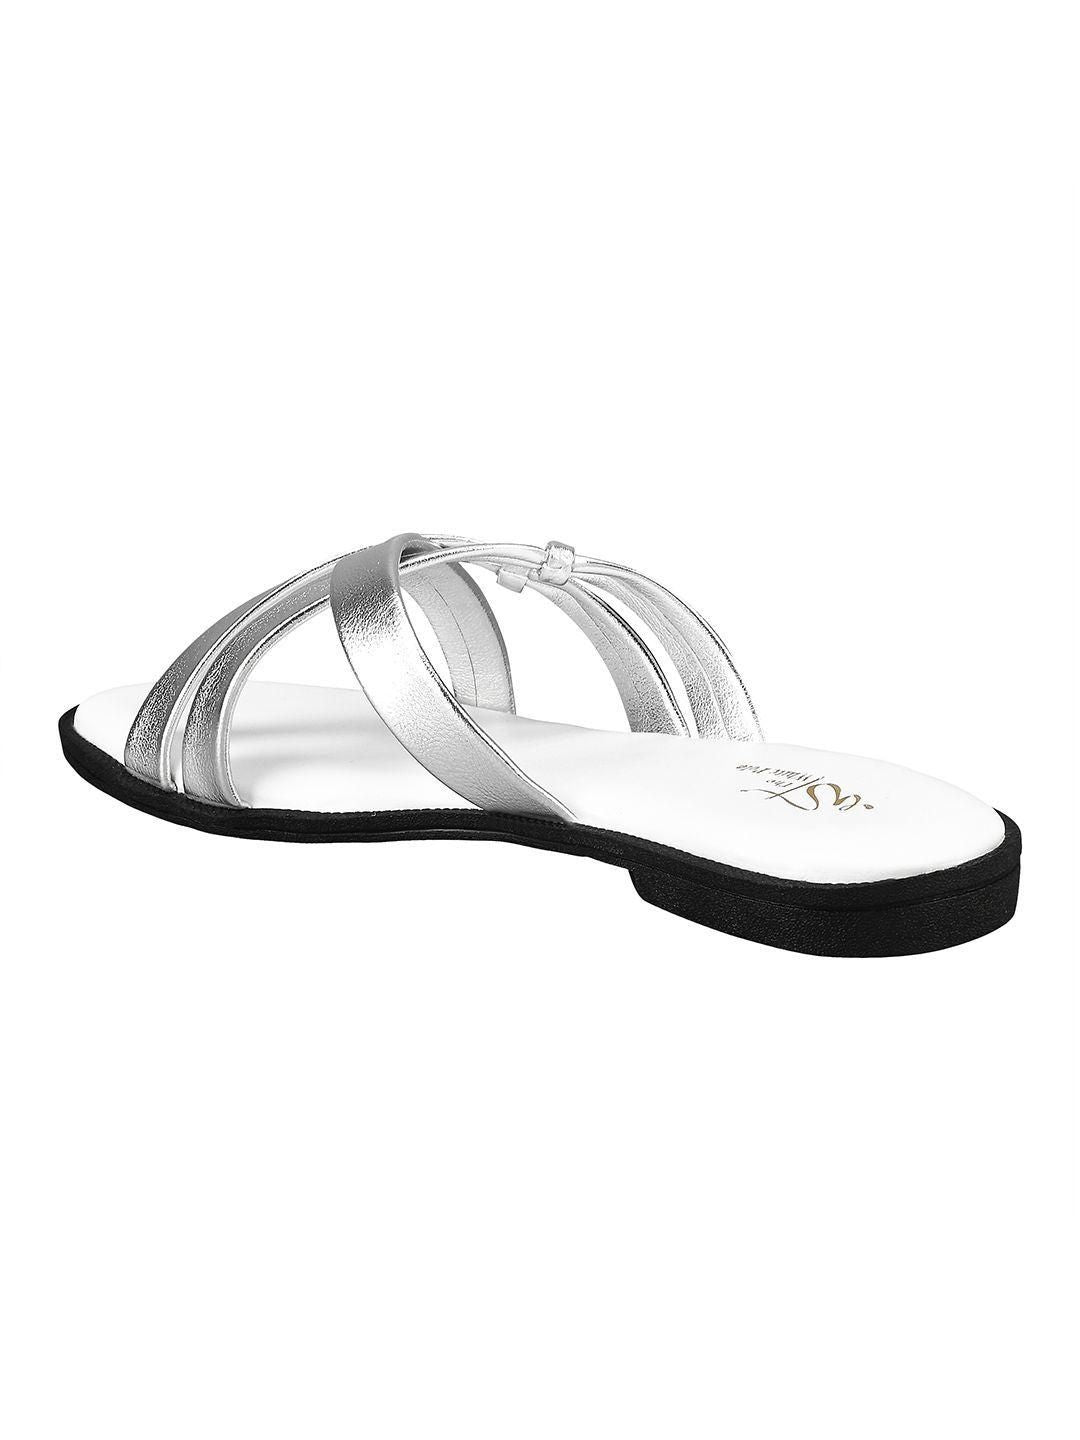 Fashionate Comfortable Sole Flat Sandal For Women's